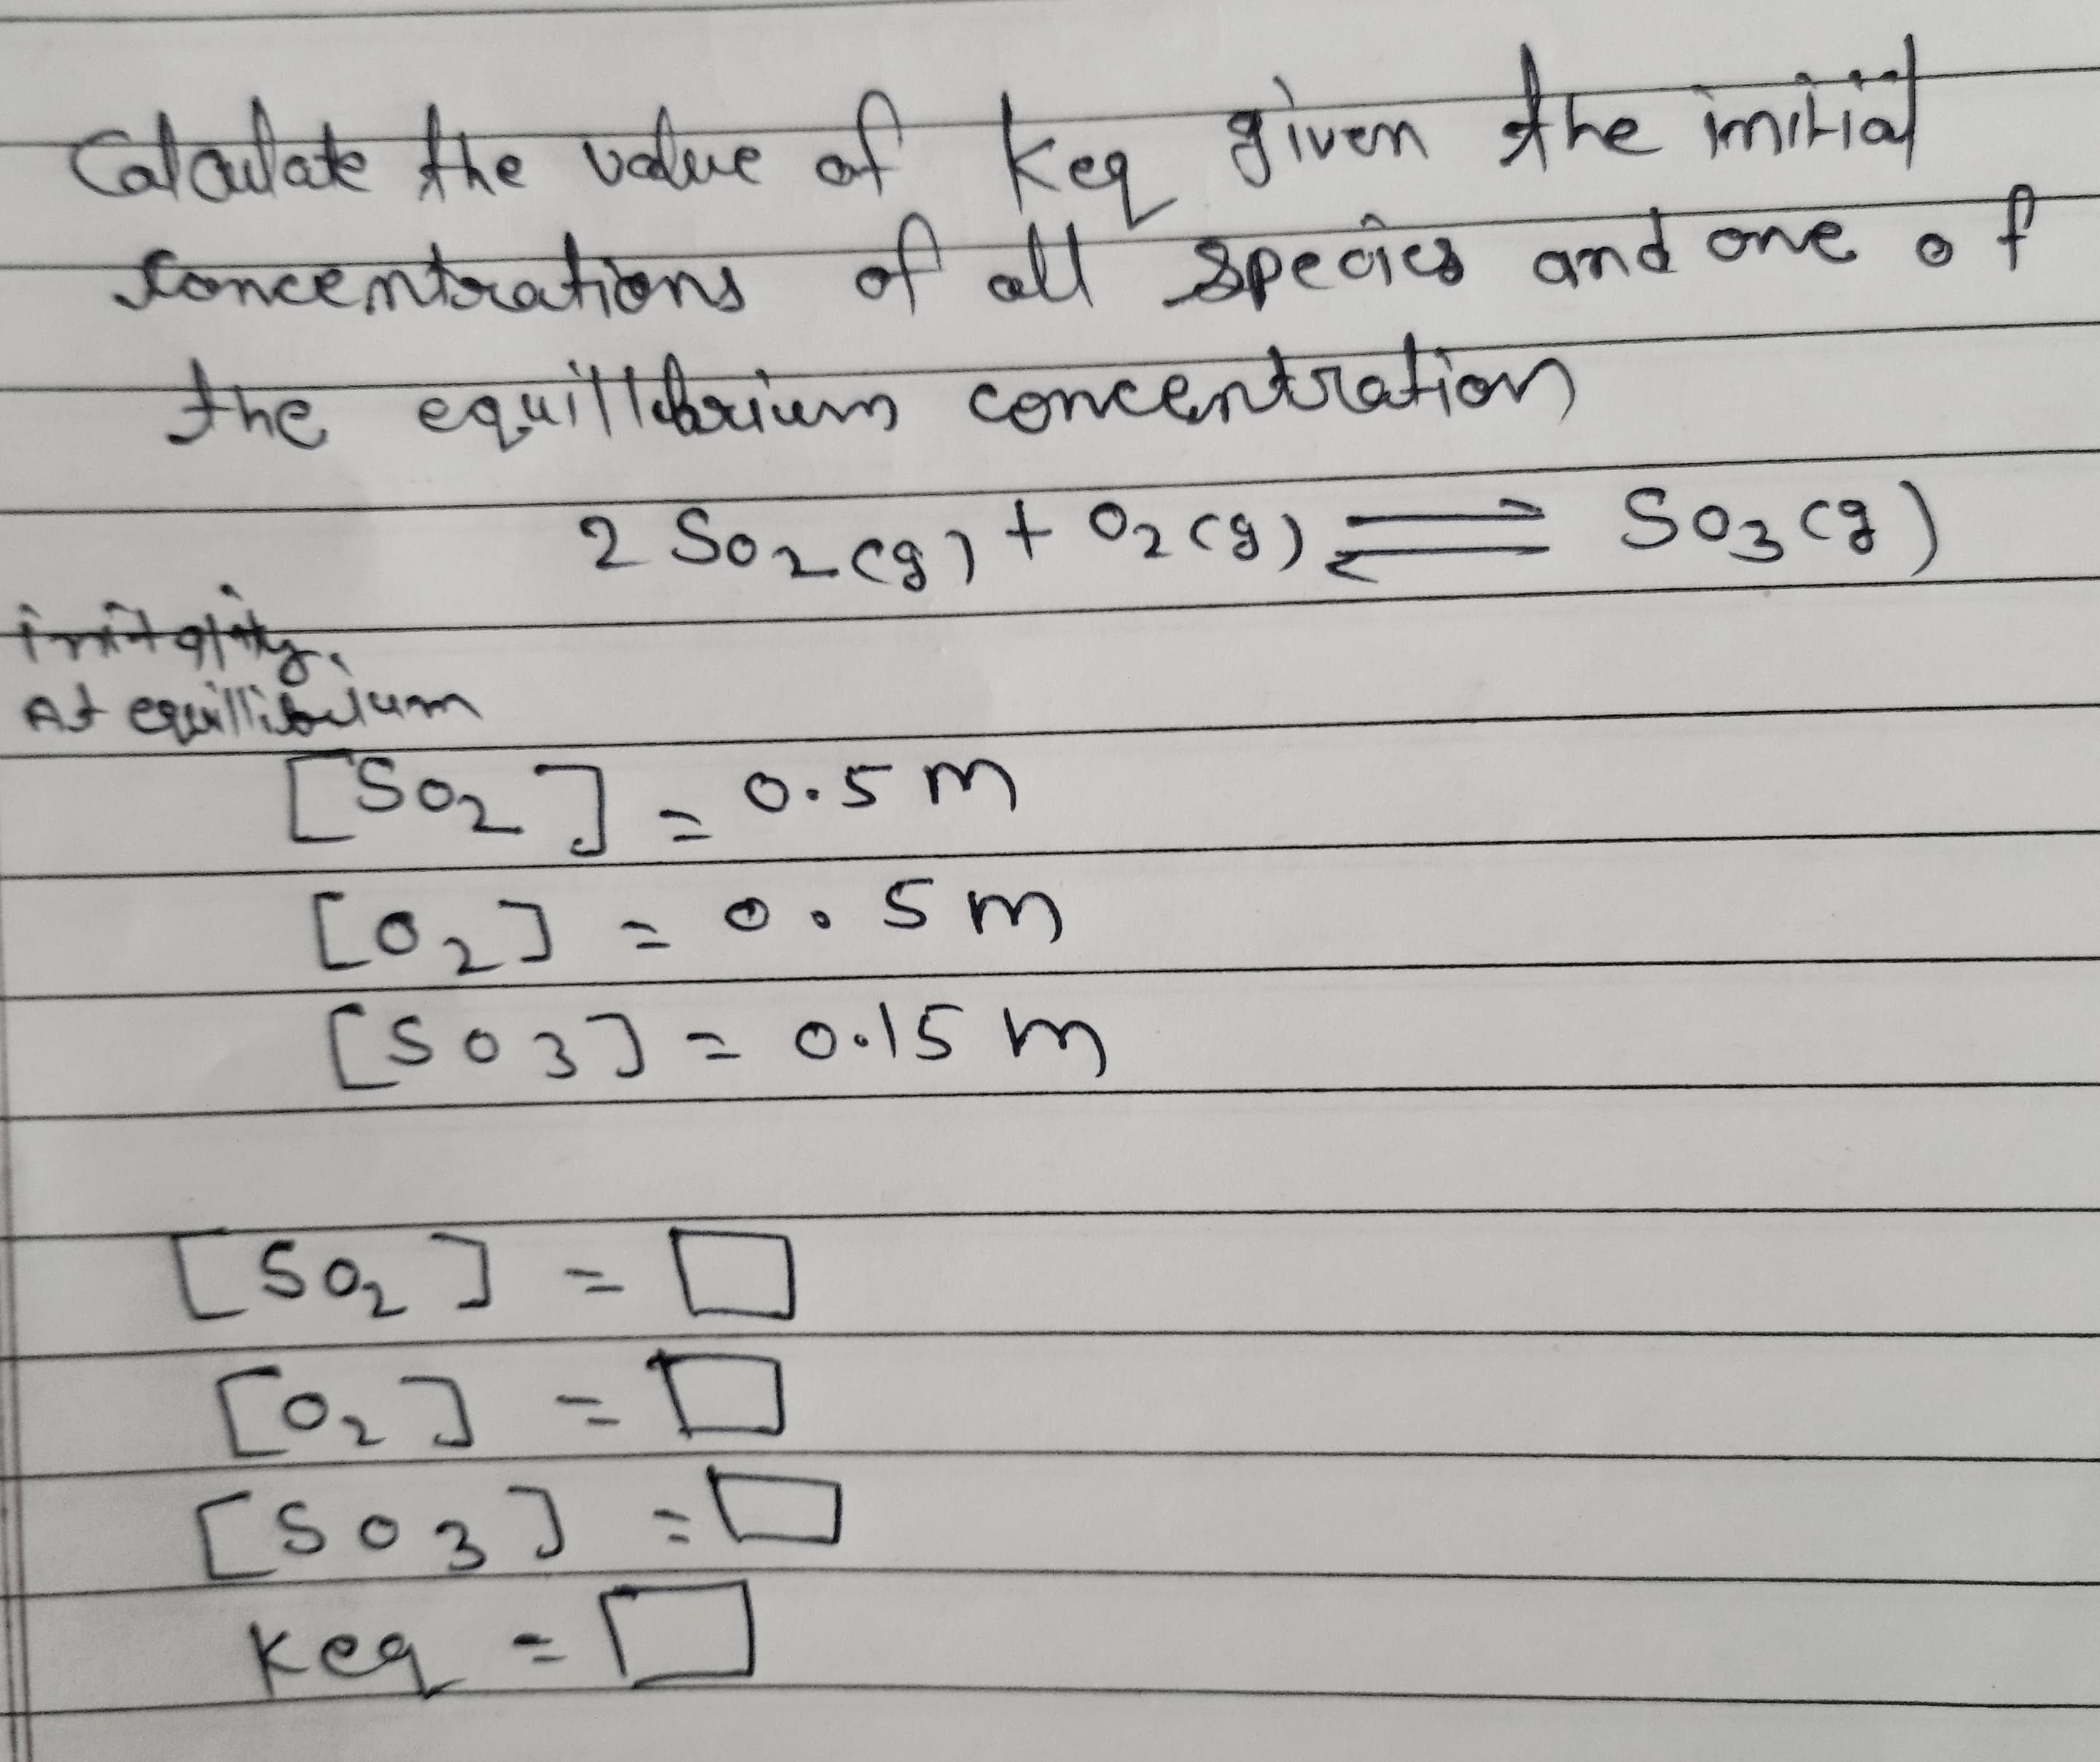 Calatatehe ualue of
ncentsaheny ली उpहनेक qnd ce o +
he equittibriem concentration
keq given the mid
न अनक वकढ
2 Soz eg)t O2cg) = So3cg)
fritgiitg.
At equilliolum
[So27-0.5m
[o2] =0.sm
[so3]= 0.15m
O.5 m
[są]
[oz] =D
[so3] =D
keq =]
%3D
